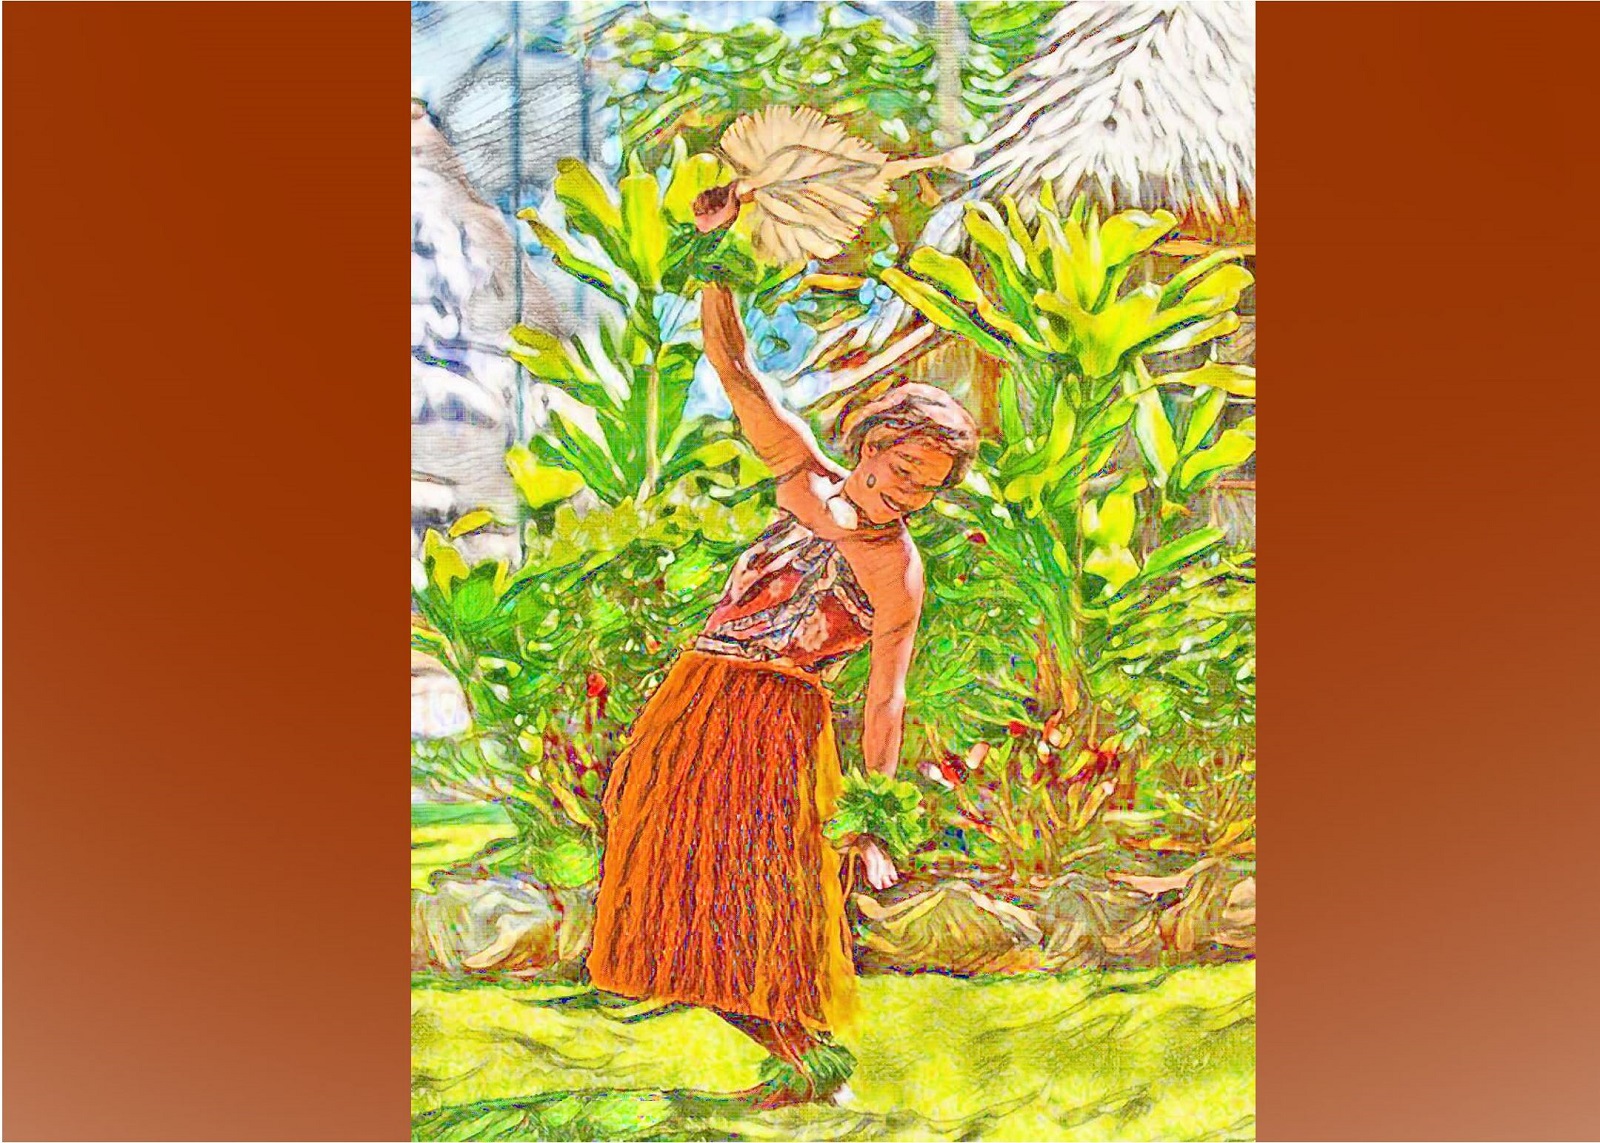 photo of fijiian woman dancing in village setting cartoonized